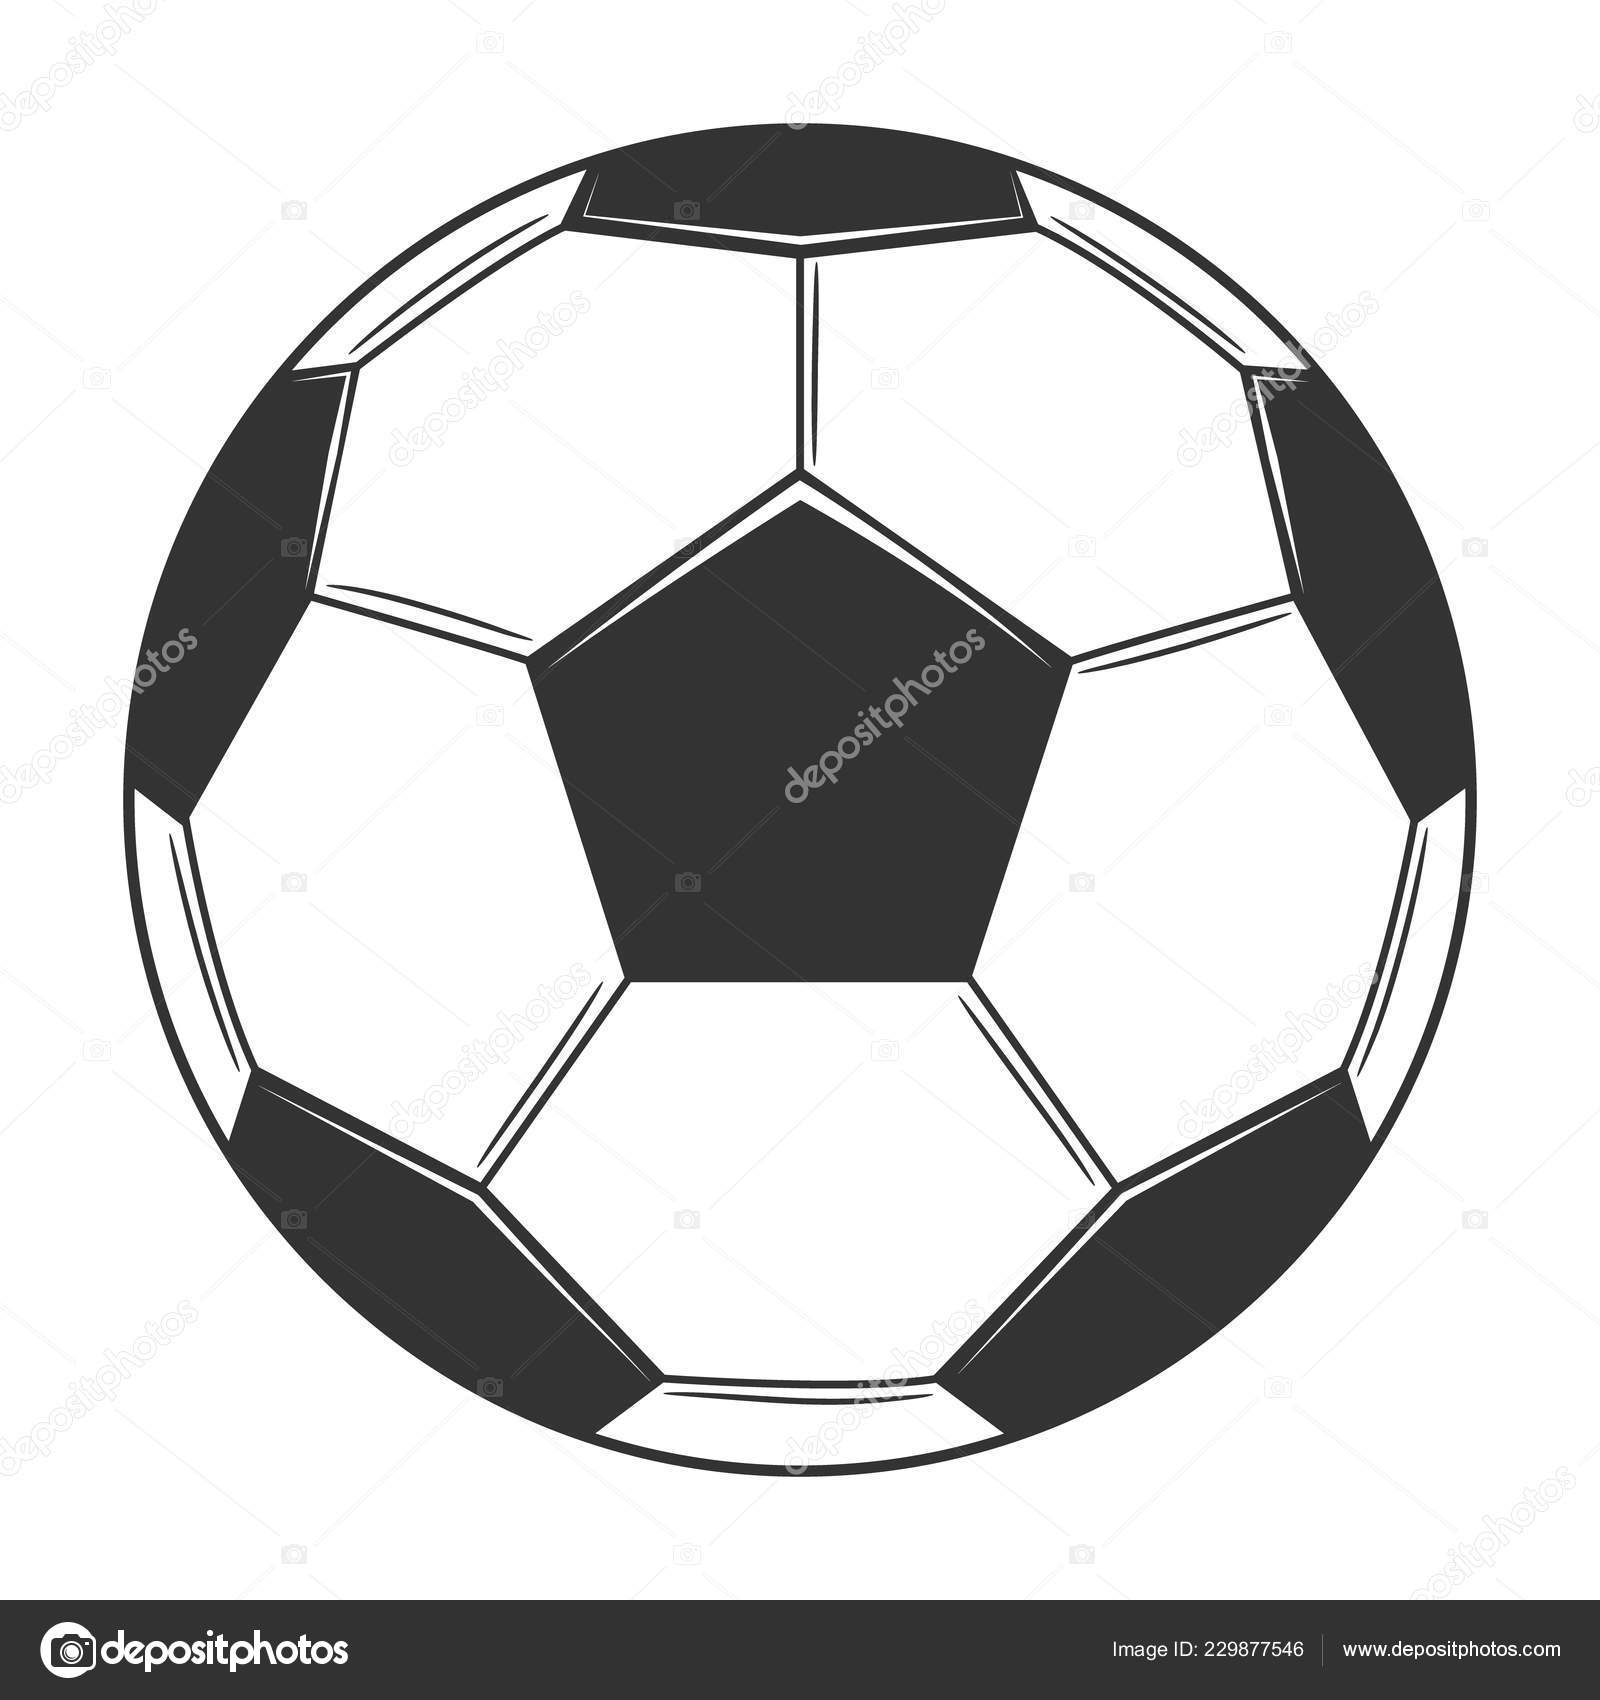 Balon de futbol soccer JPG  Football ball, Black and white football, Soccer